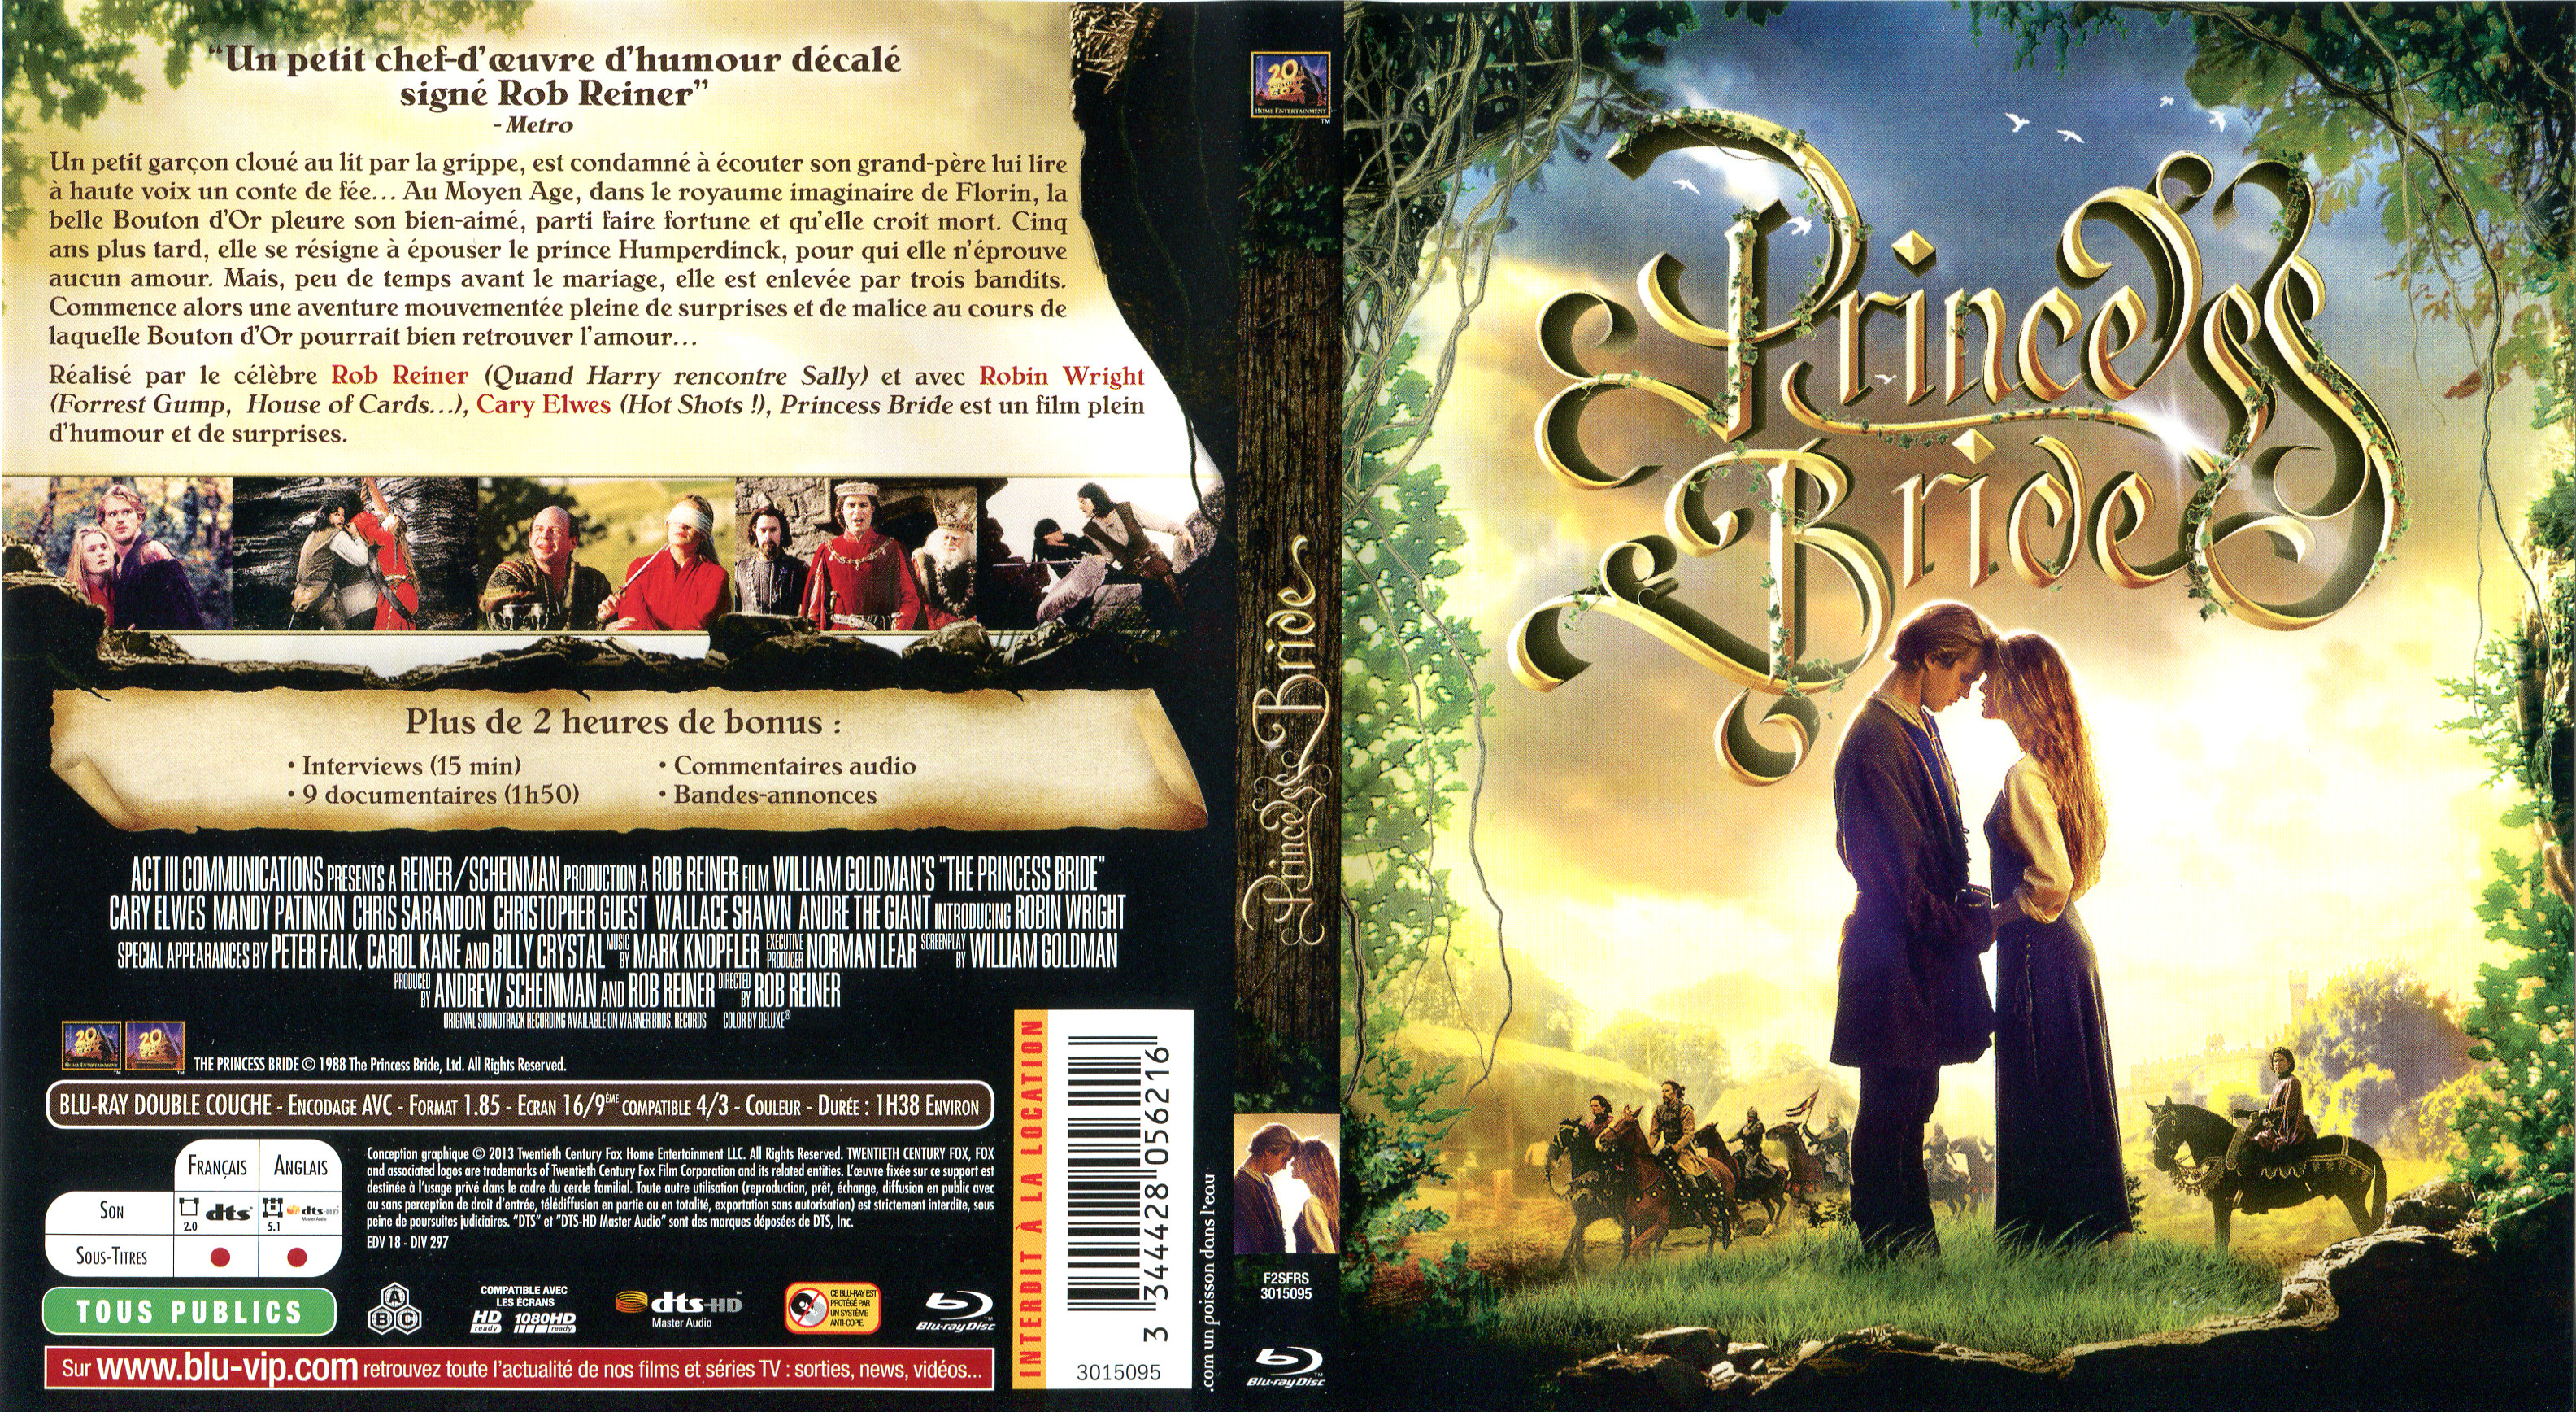 Jaquette DVD Princess bride (BLU-RAY) v2